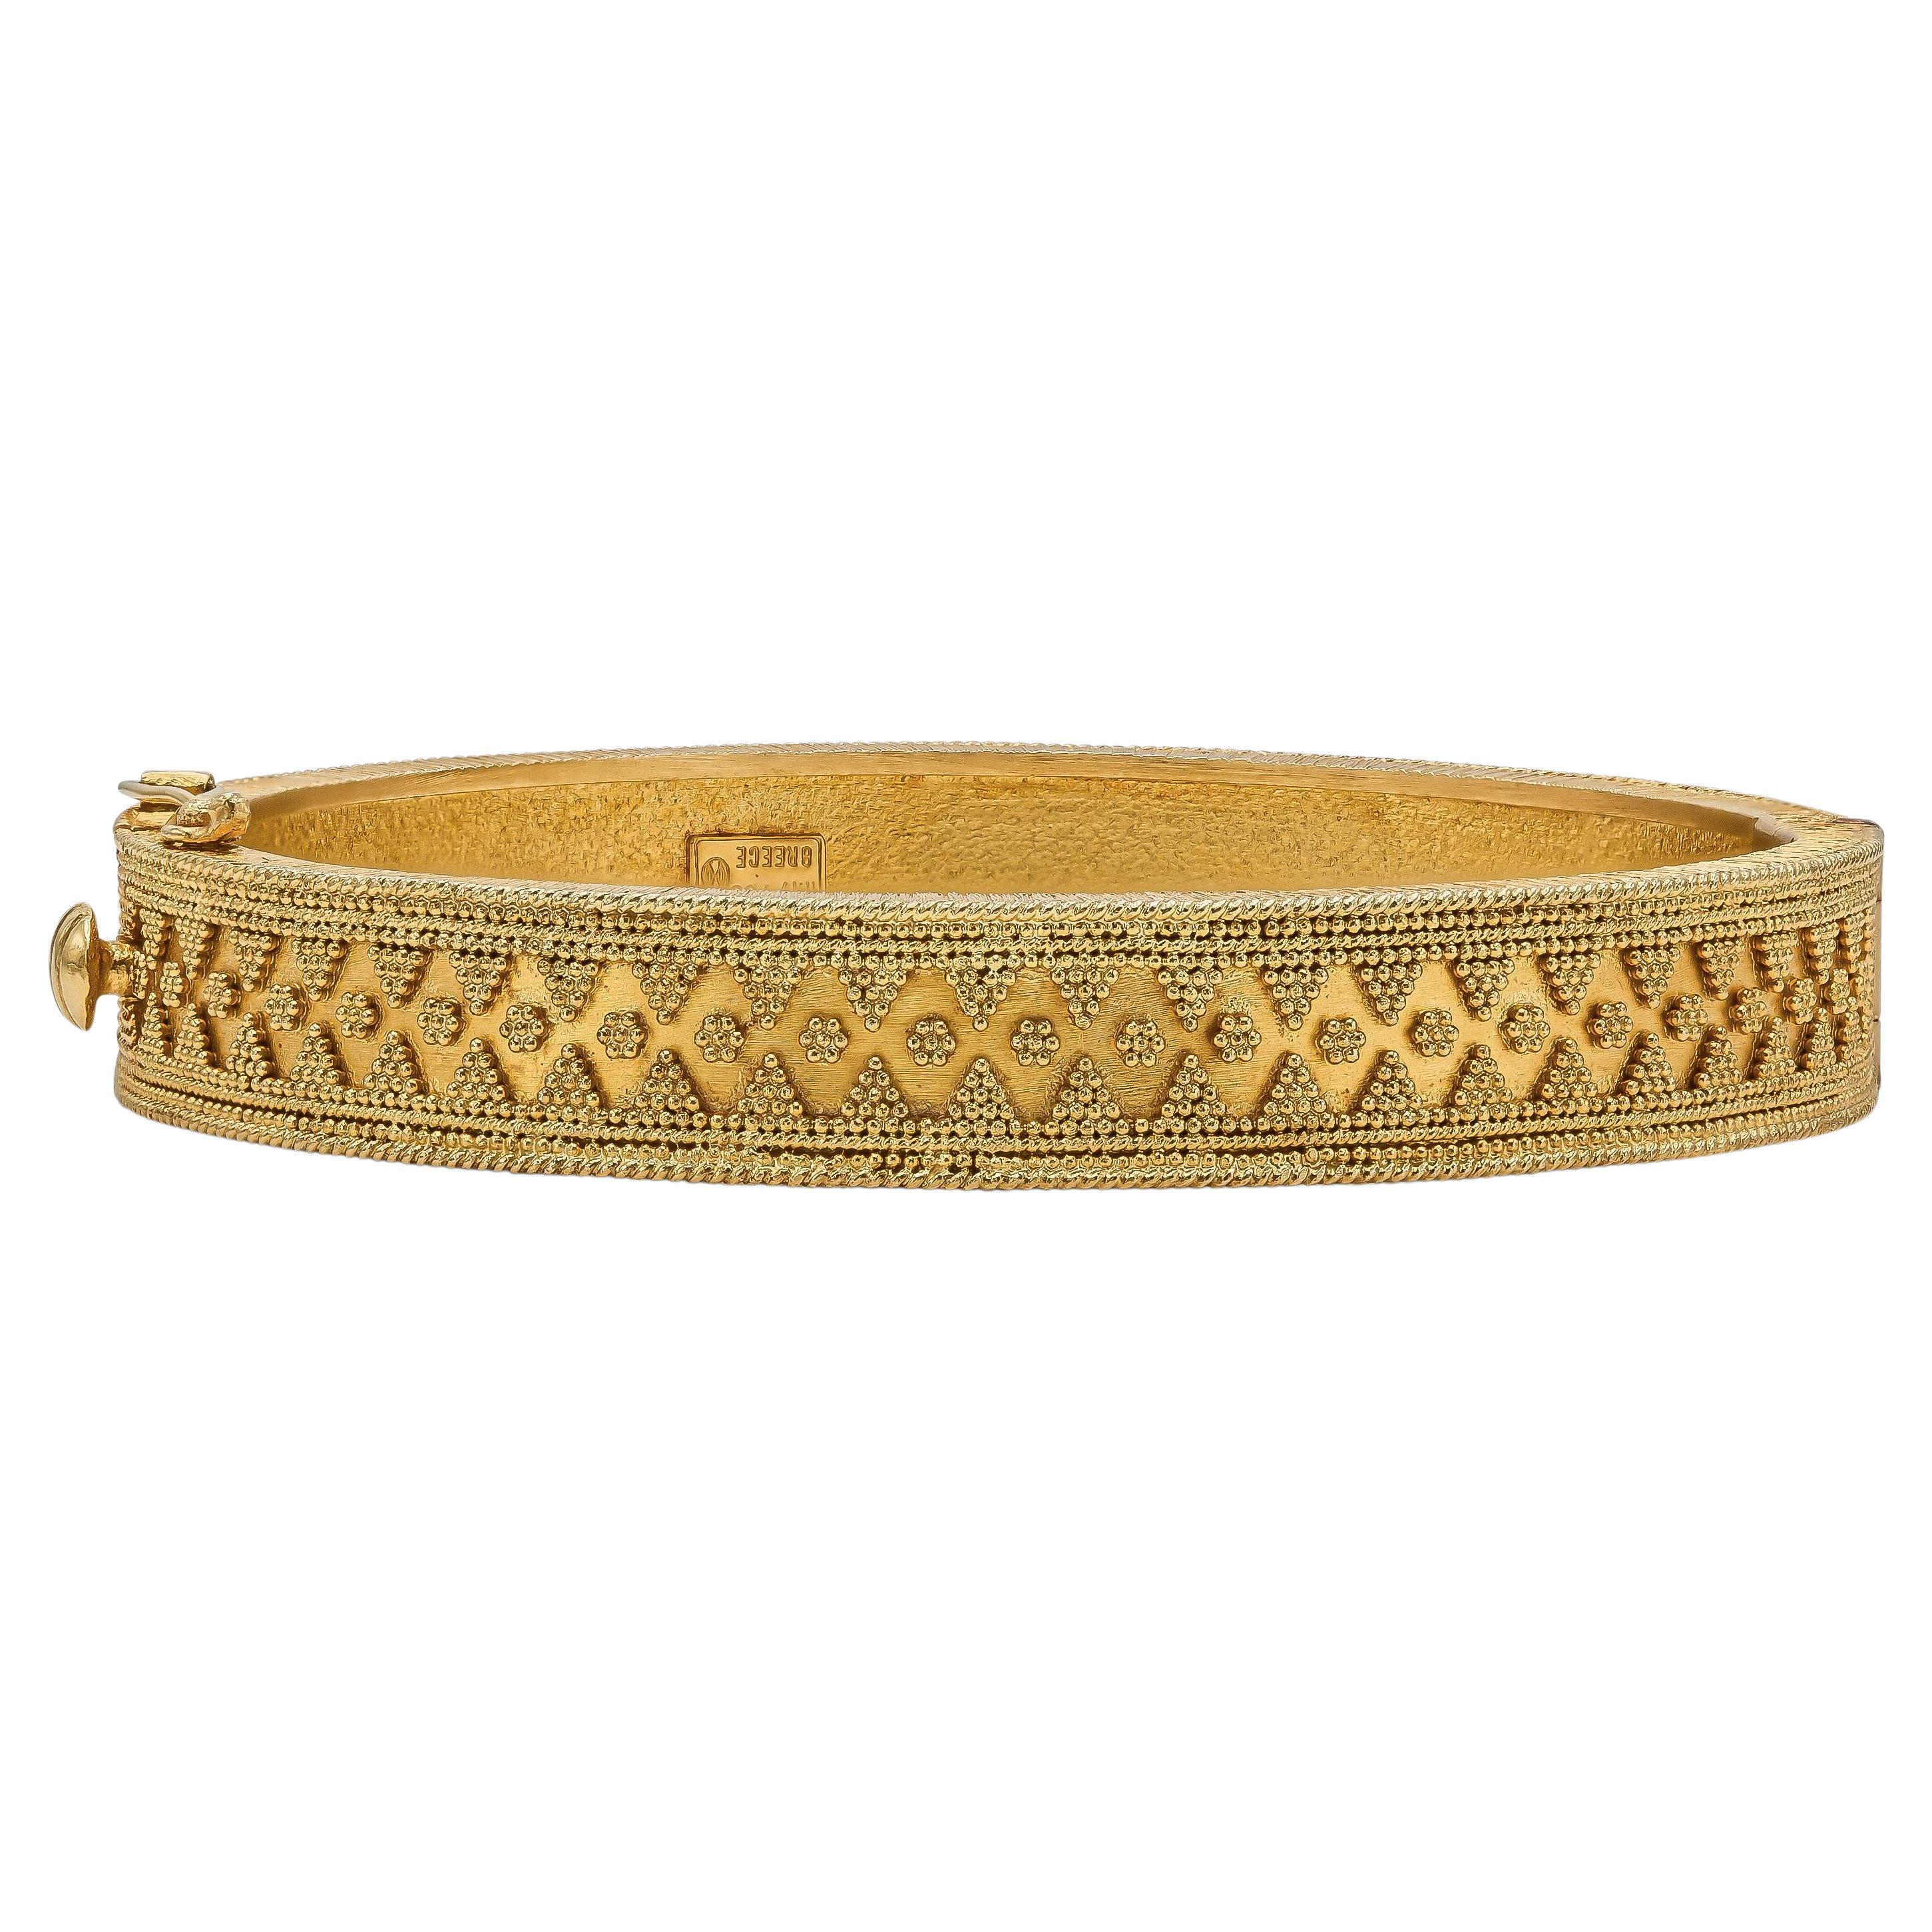 Vintage 1960s Lalaounis Gold Hinged Bangle Bracelet